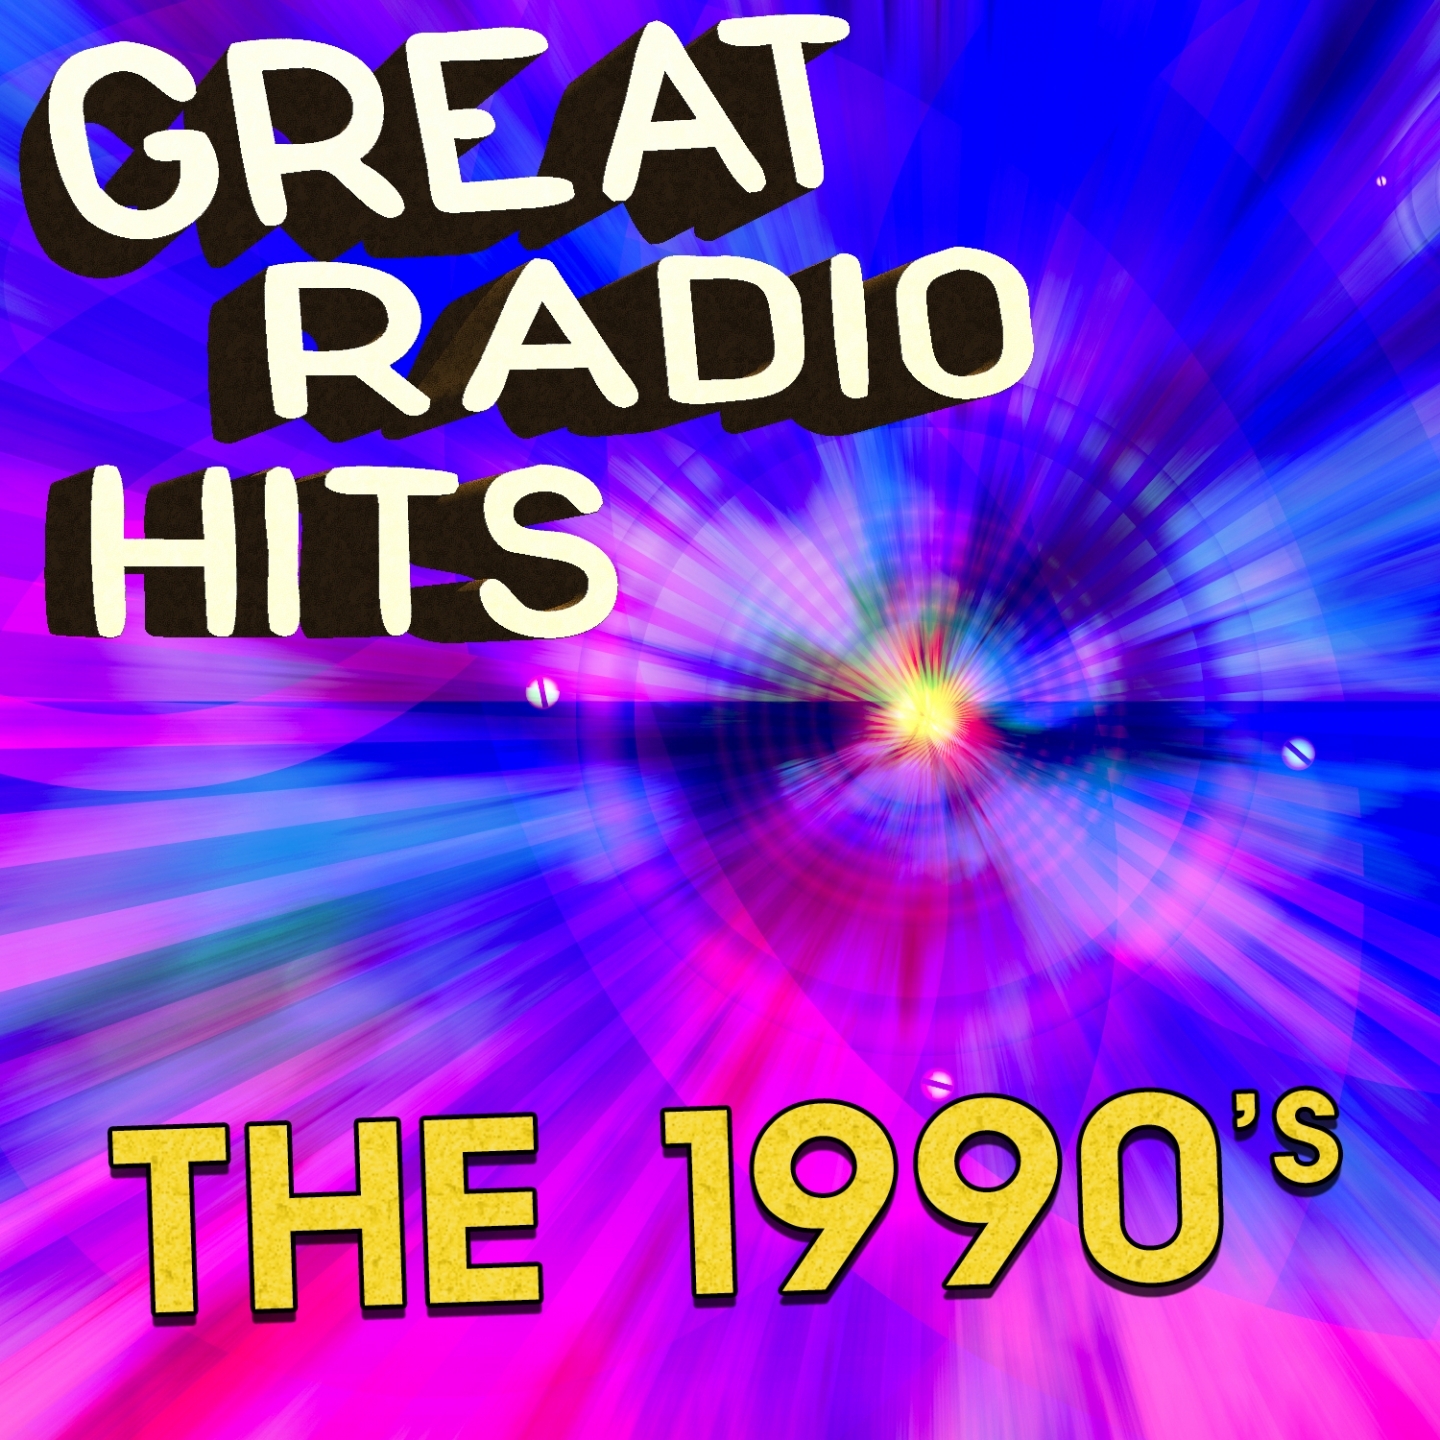 Great Radio Hits: The 1990's